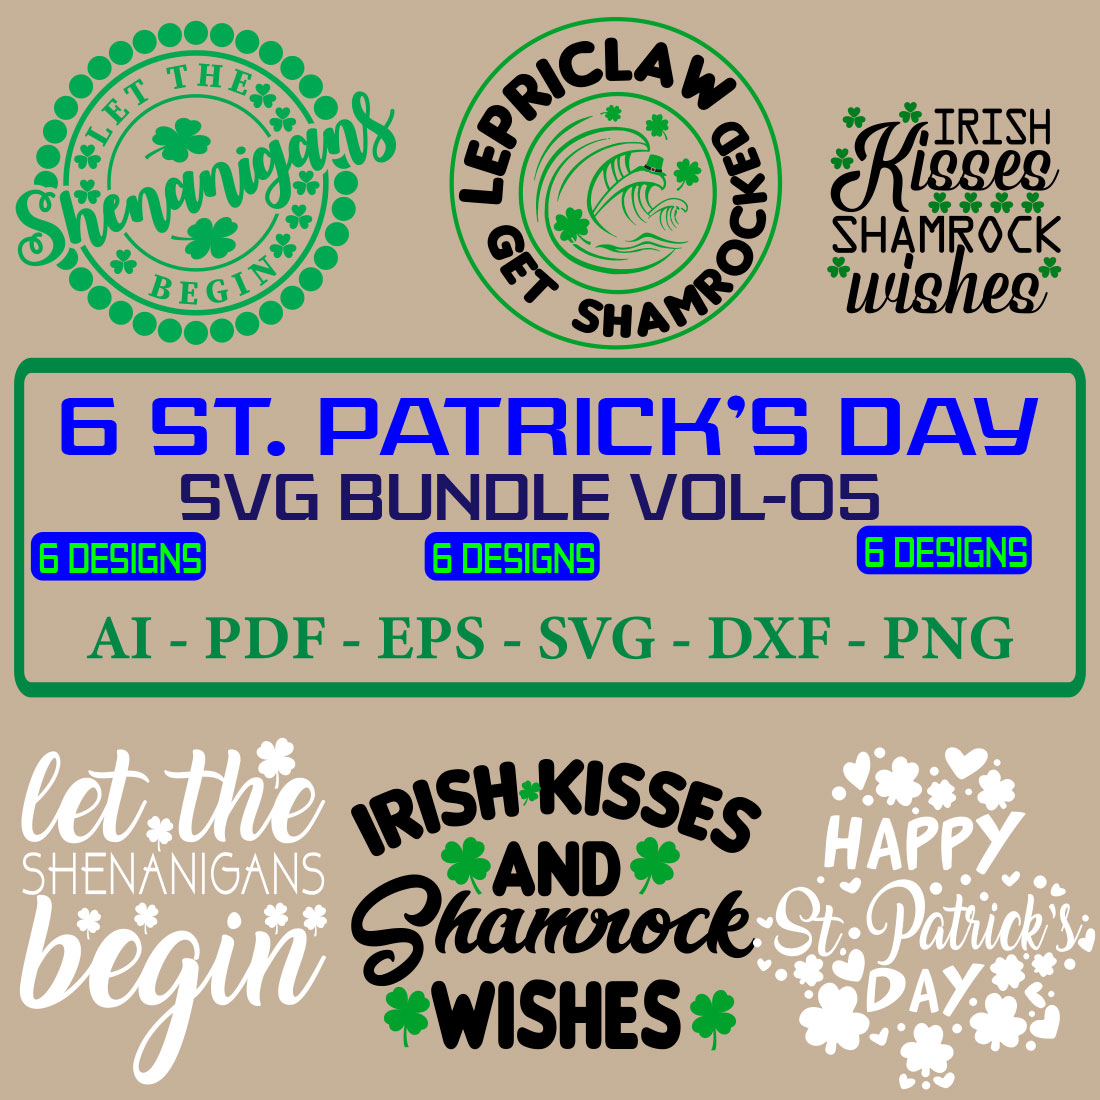 6 St Patrick’s Day SVG Bundle Vol 05 cover image.